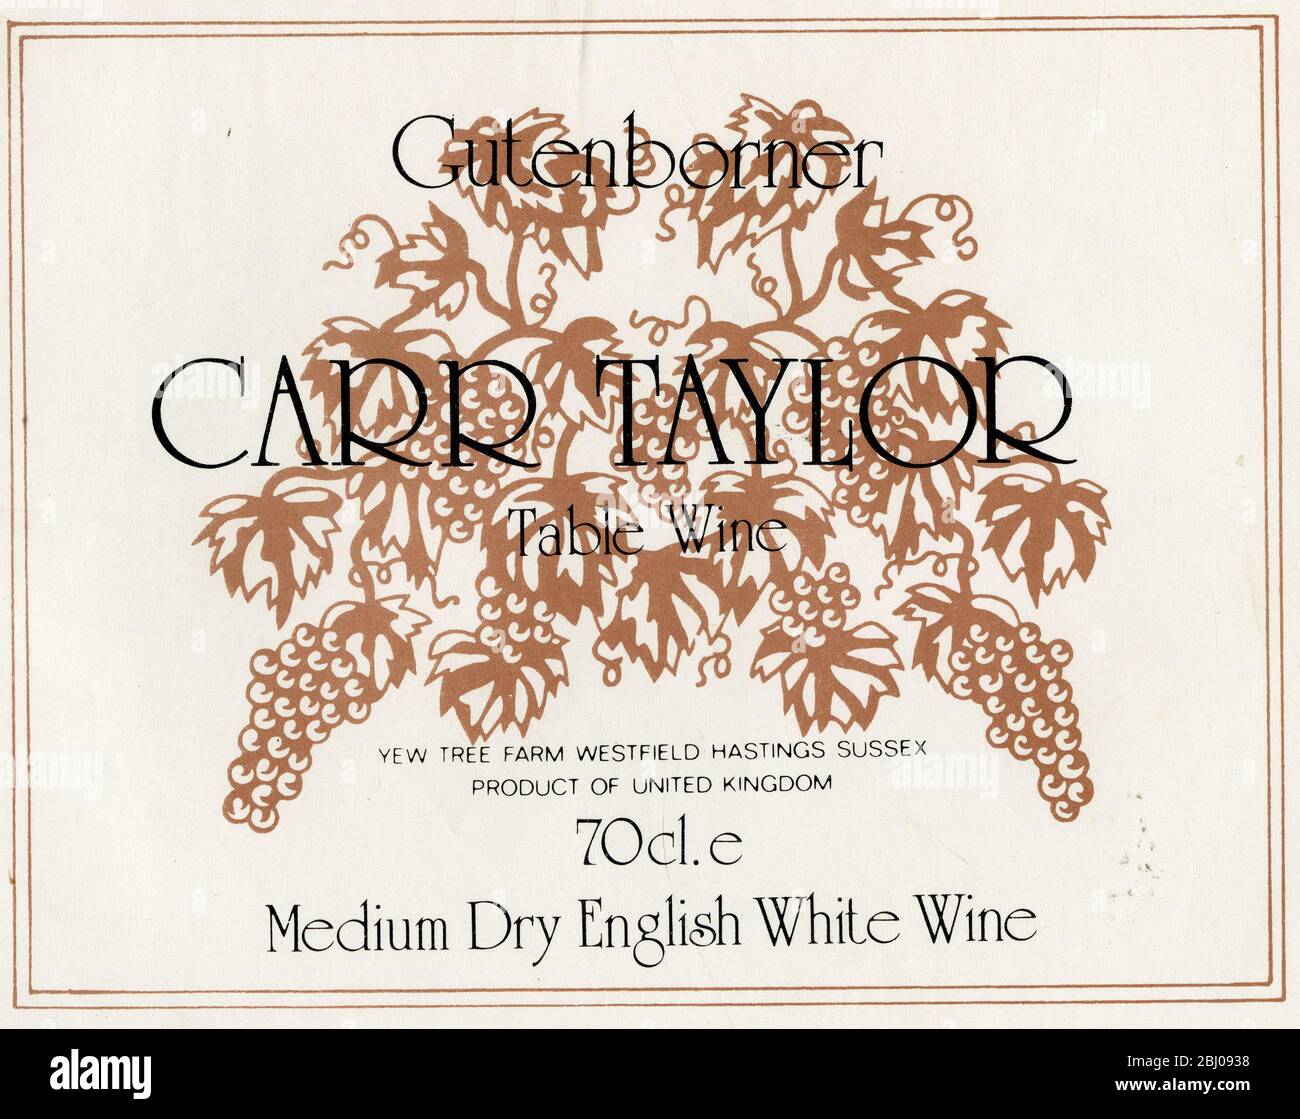 Wine Label. - Gutenborner. Carr Taylor. Table Wine. Yew Tree Farm Hastings Sussex. Product of the United Kingdom. Medium Dry English White Wine. Stock Photo